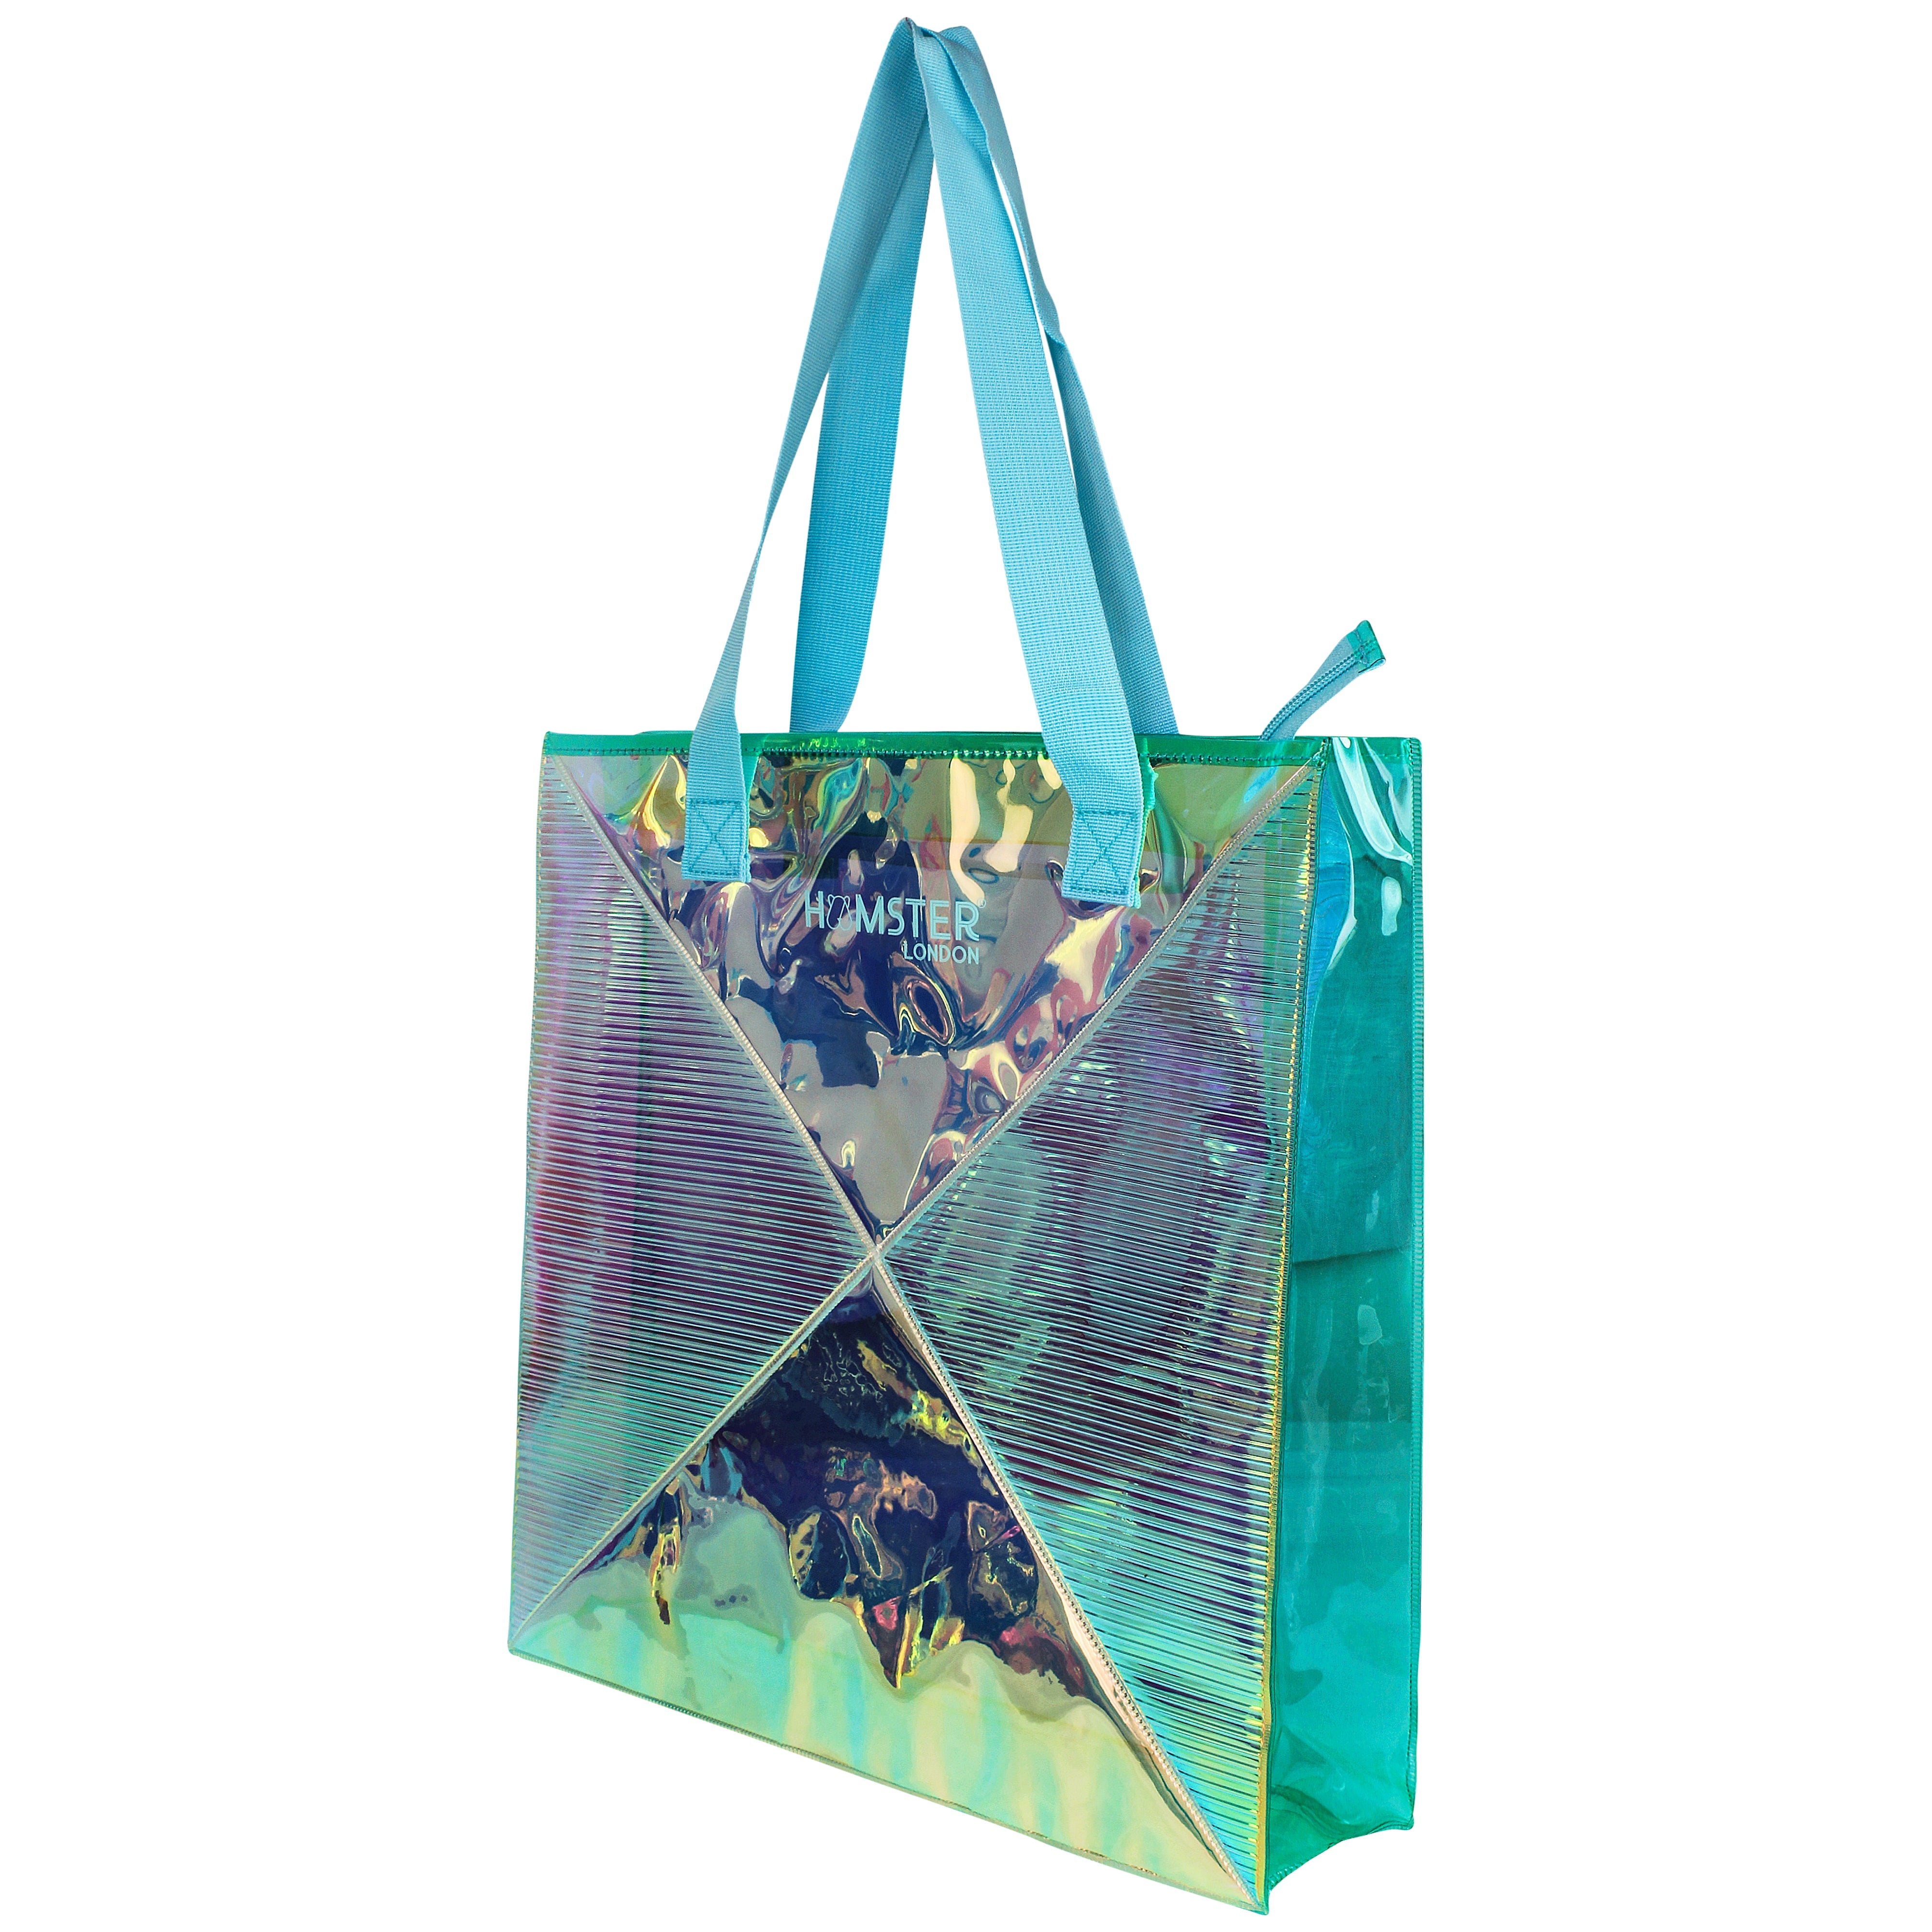 HL Classic Tote Bag Aqua With Personalization